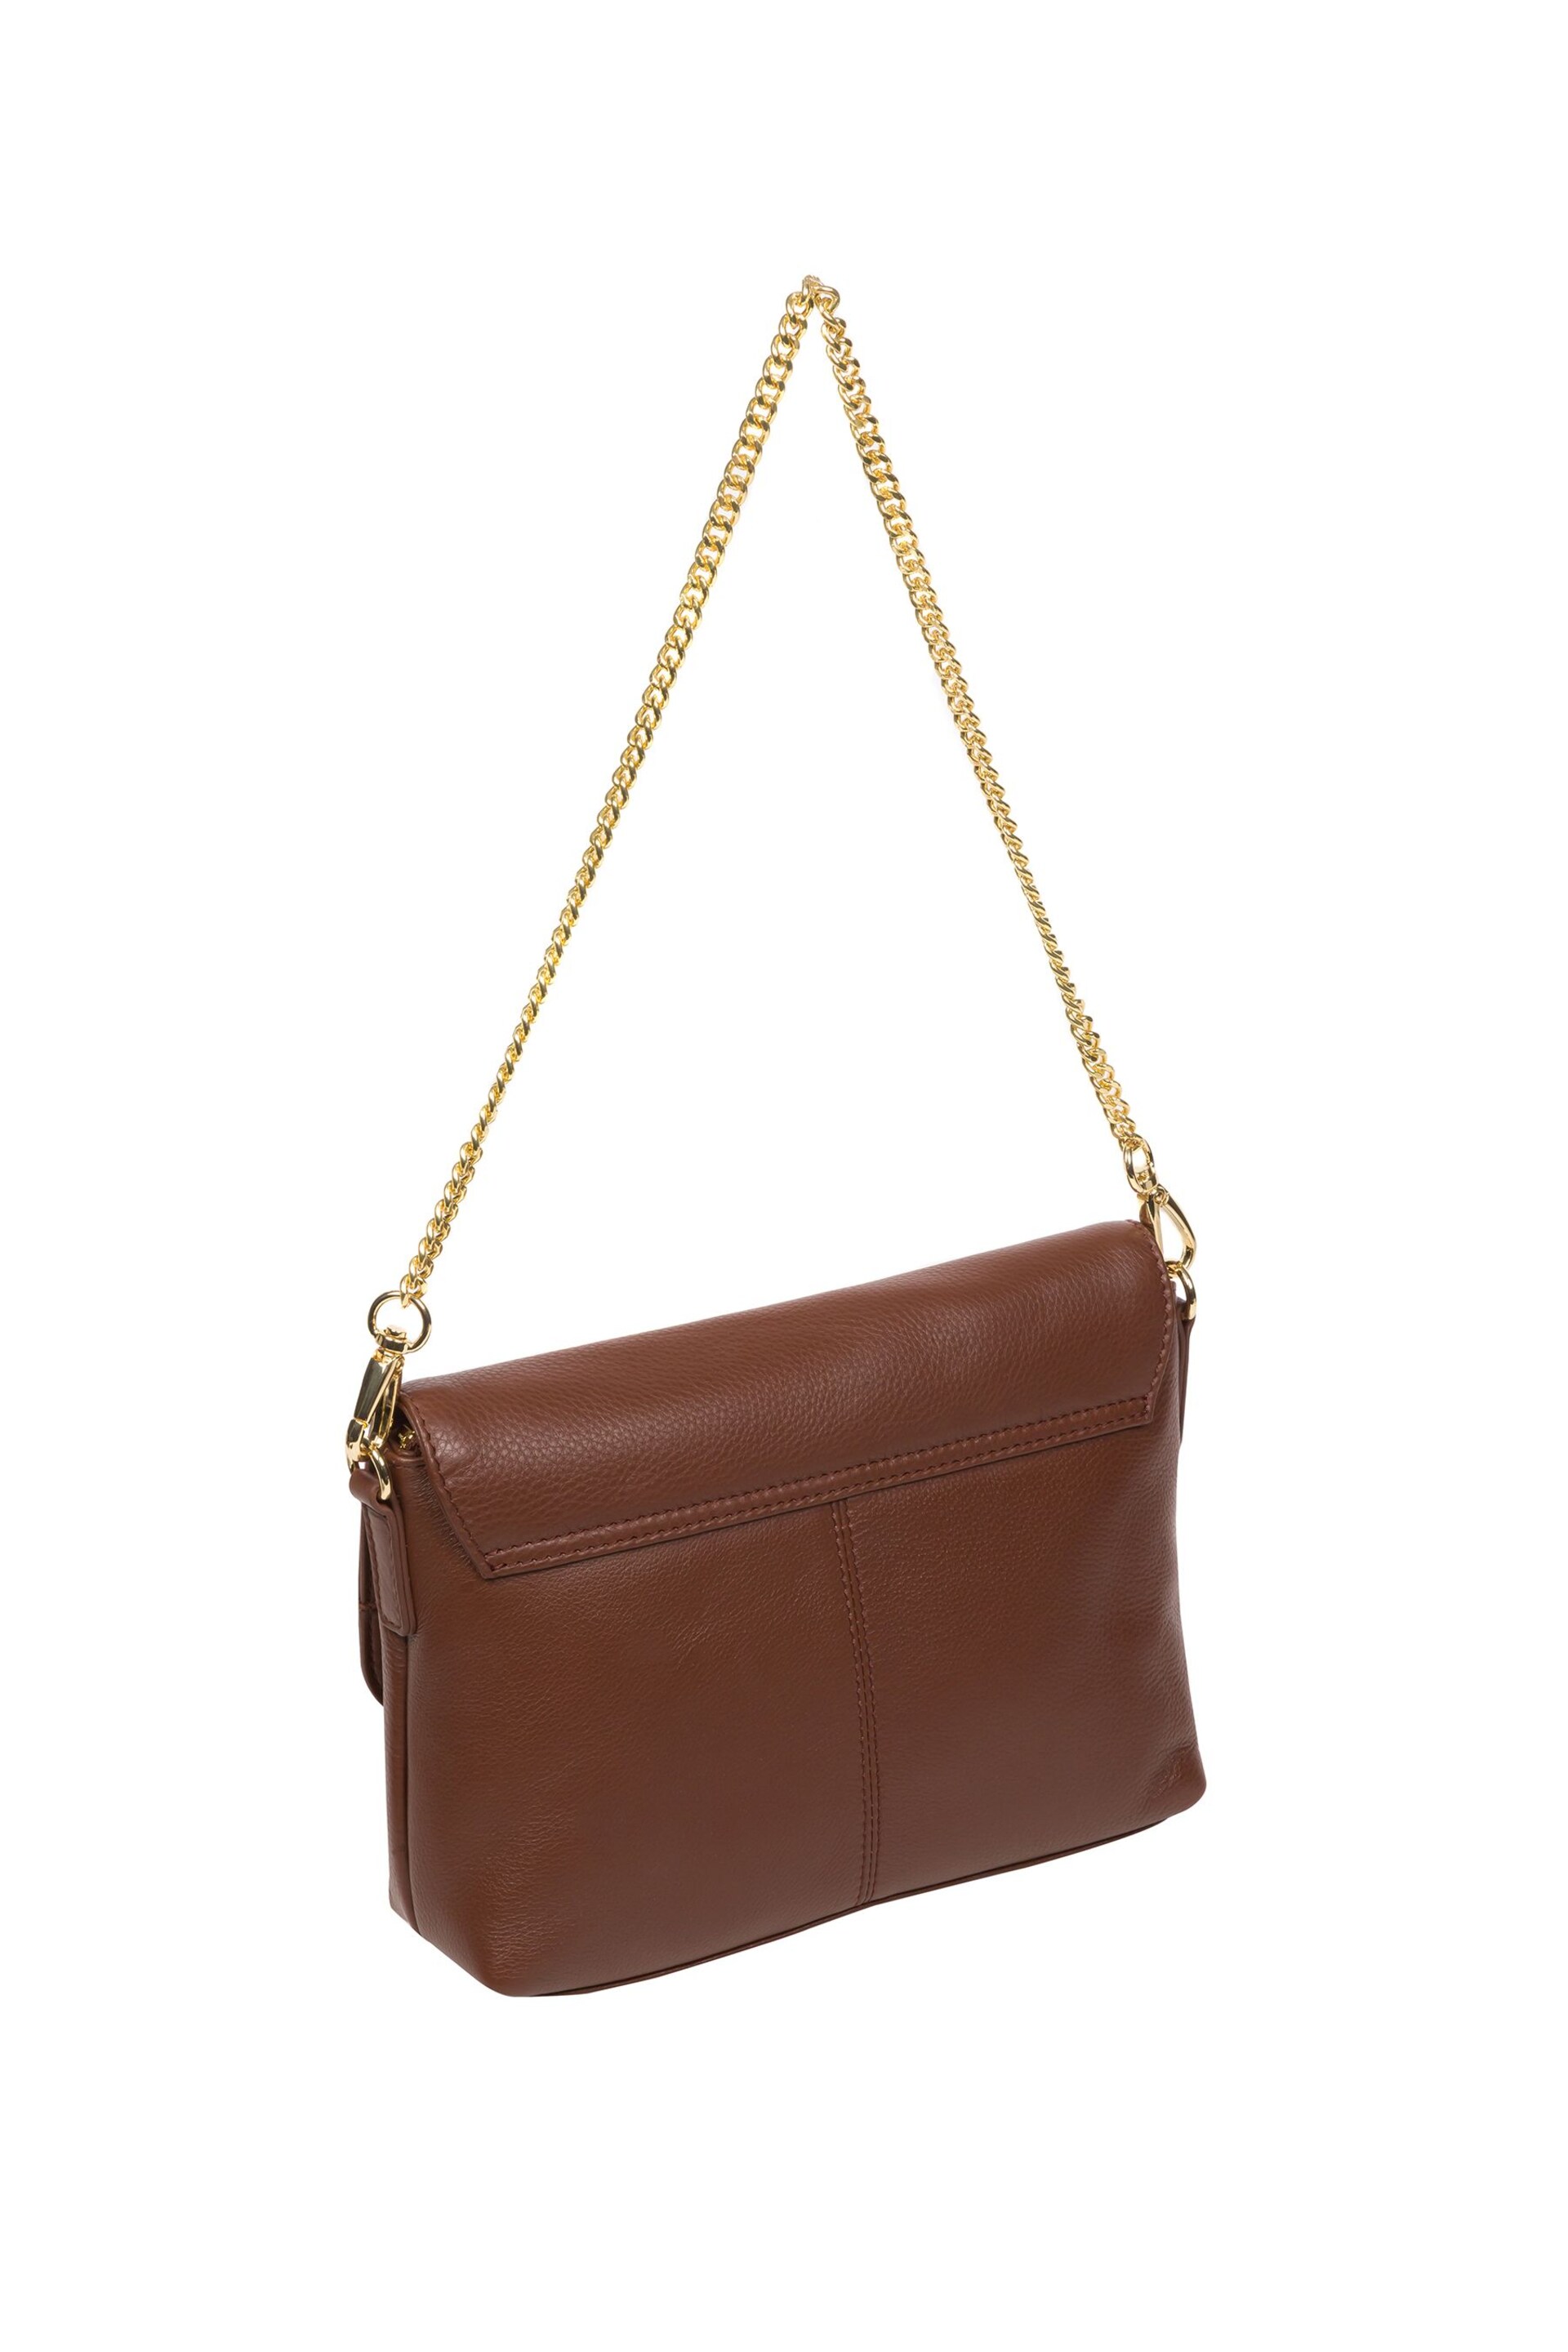 Pure Luxuries London Jazmine Nappa Leather Grab Clutch Bag - Image 2 of 8